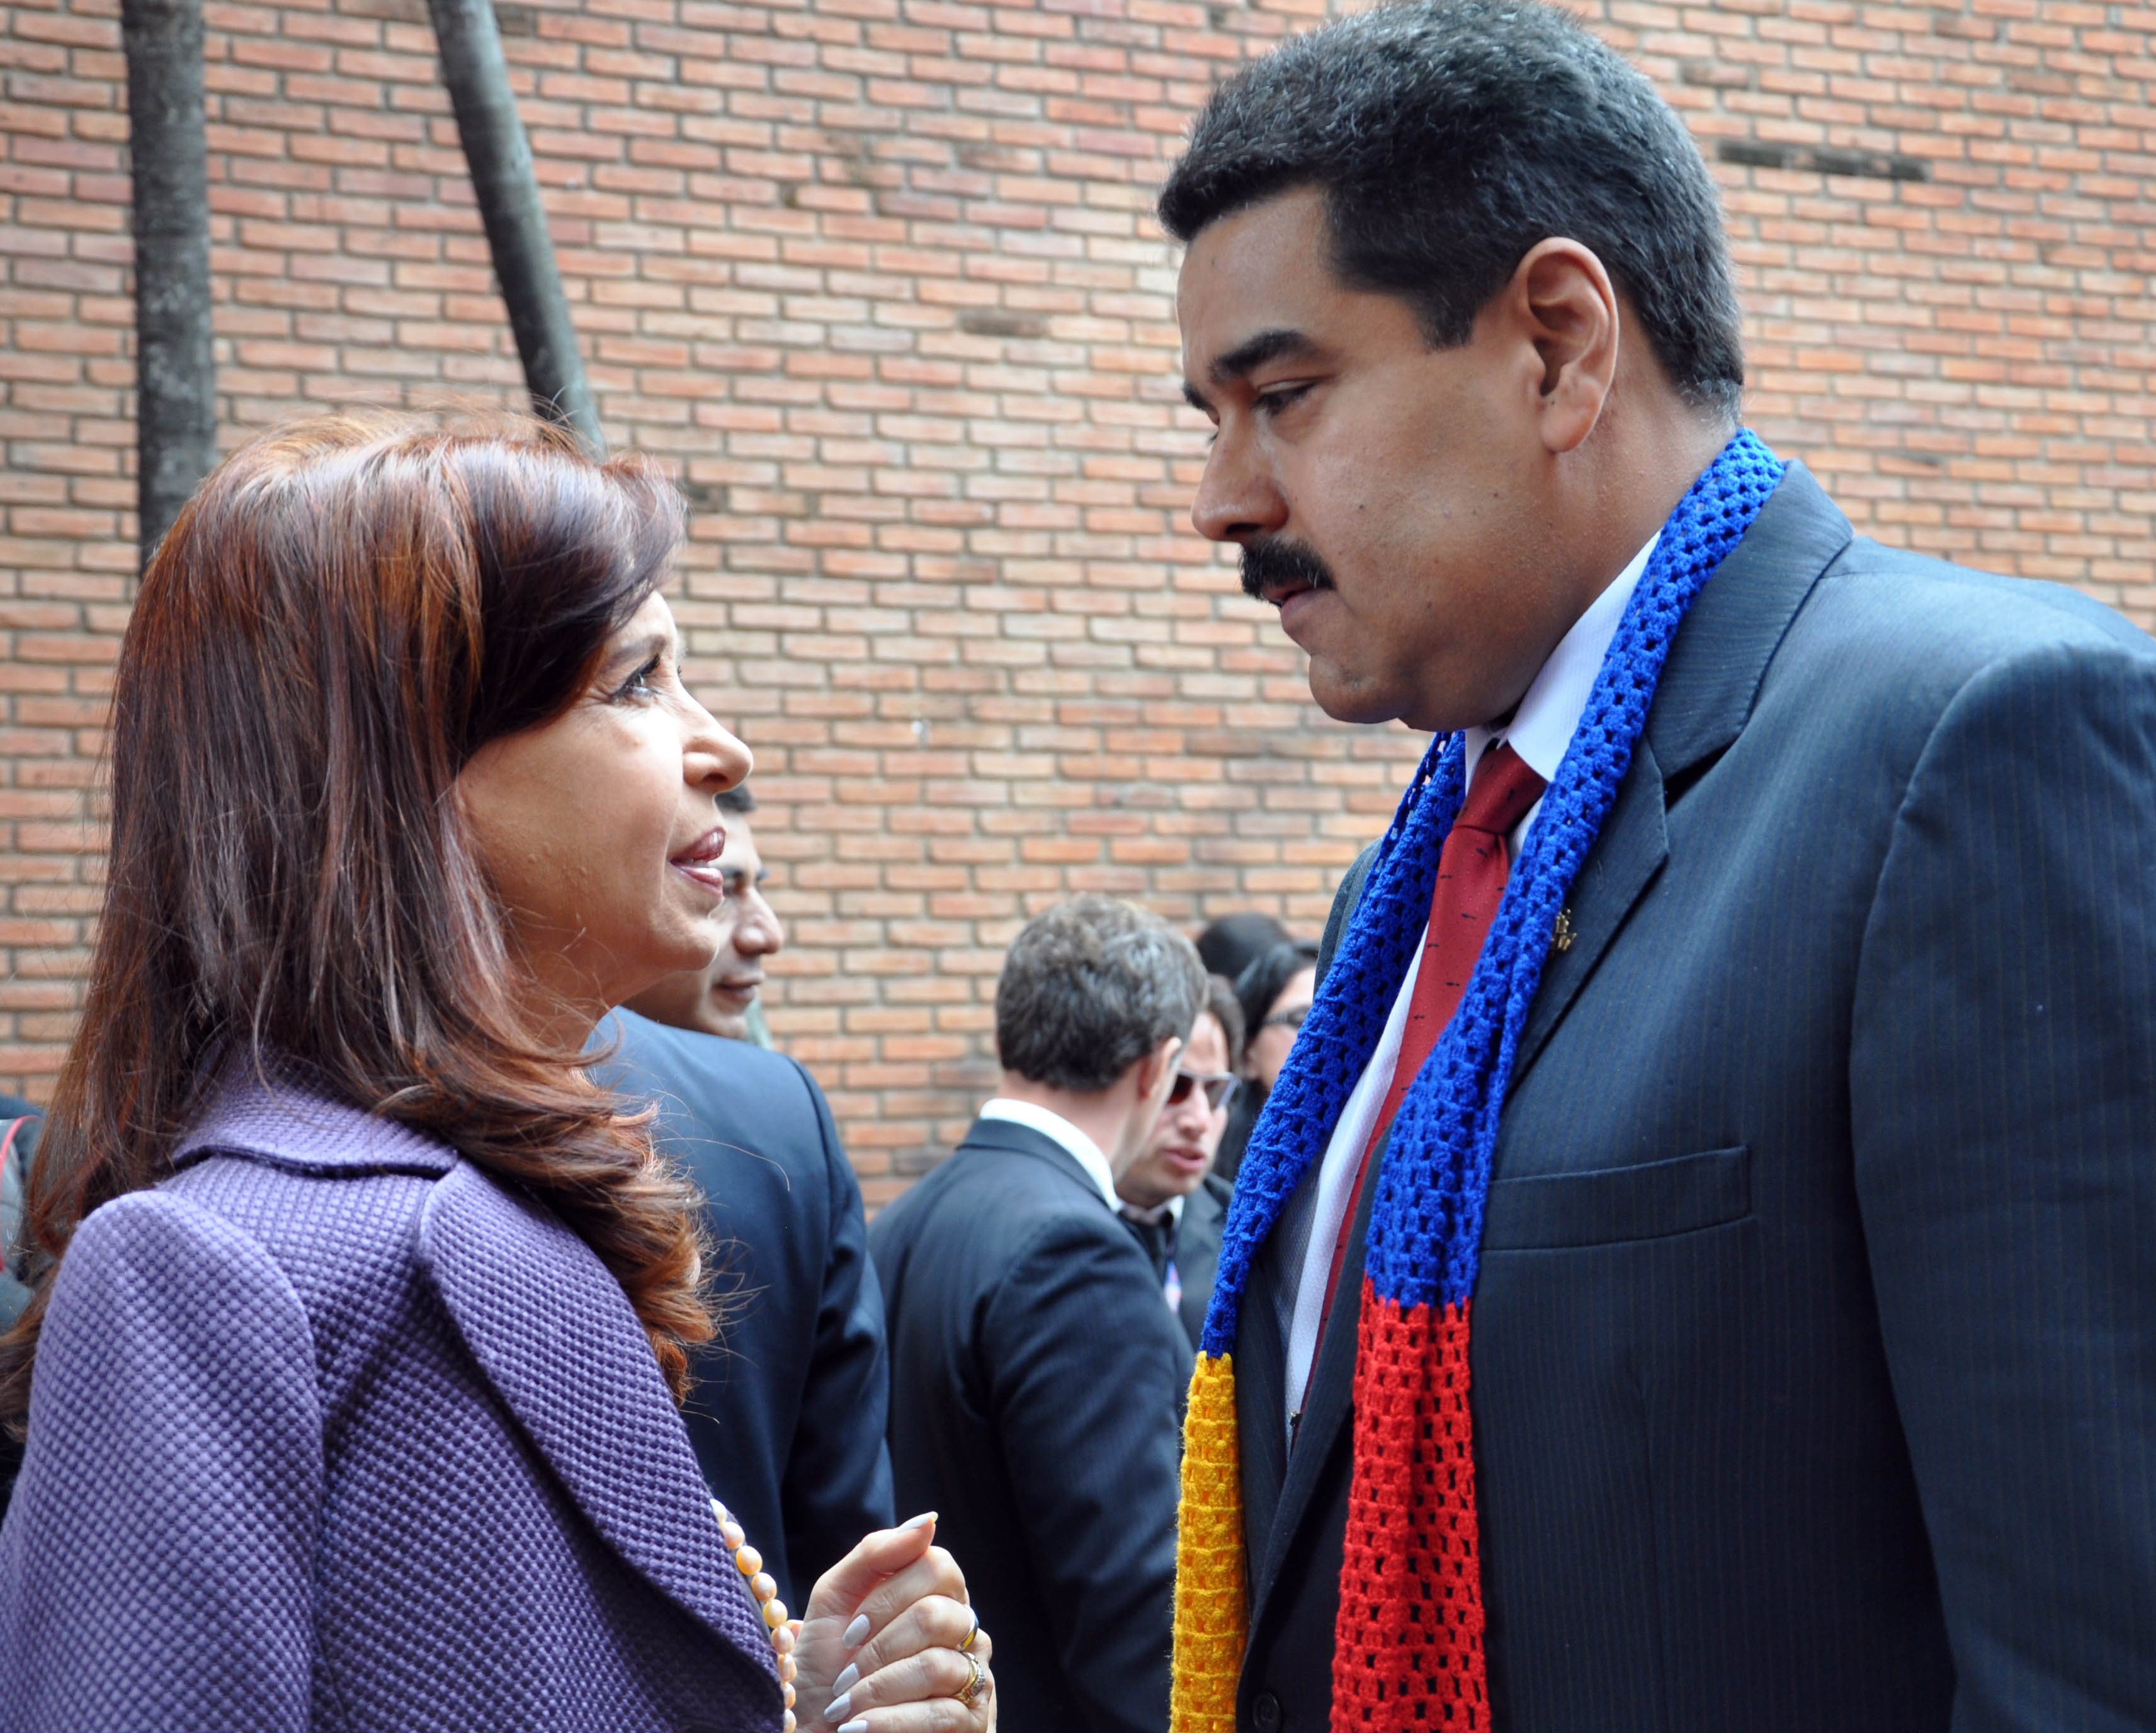 Cristina y Maduro